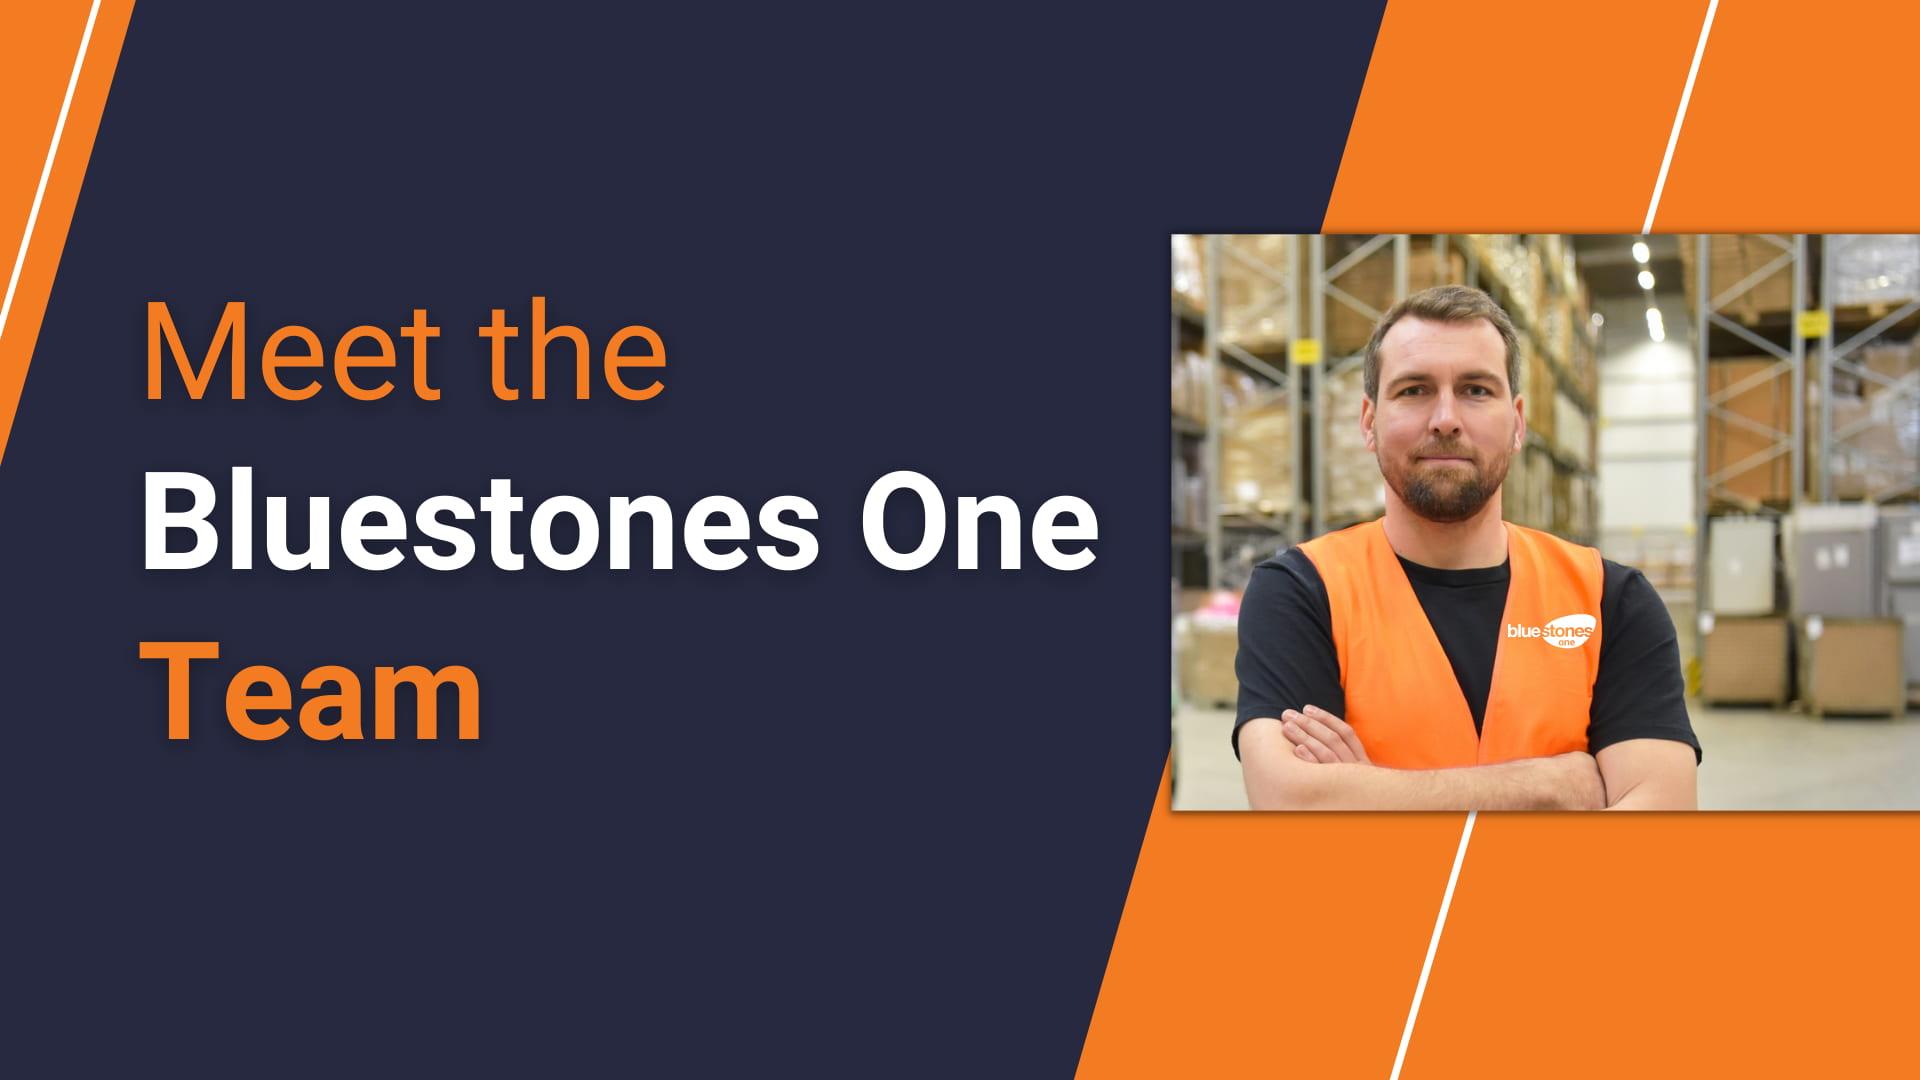 Meet the Bluestones One Team: